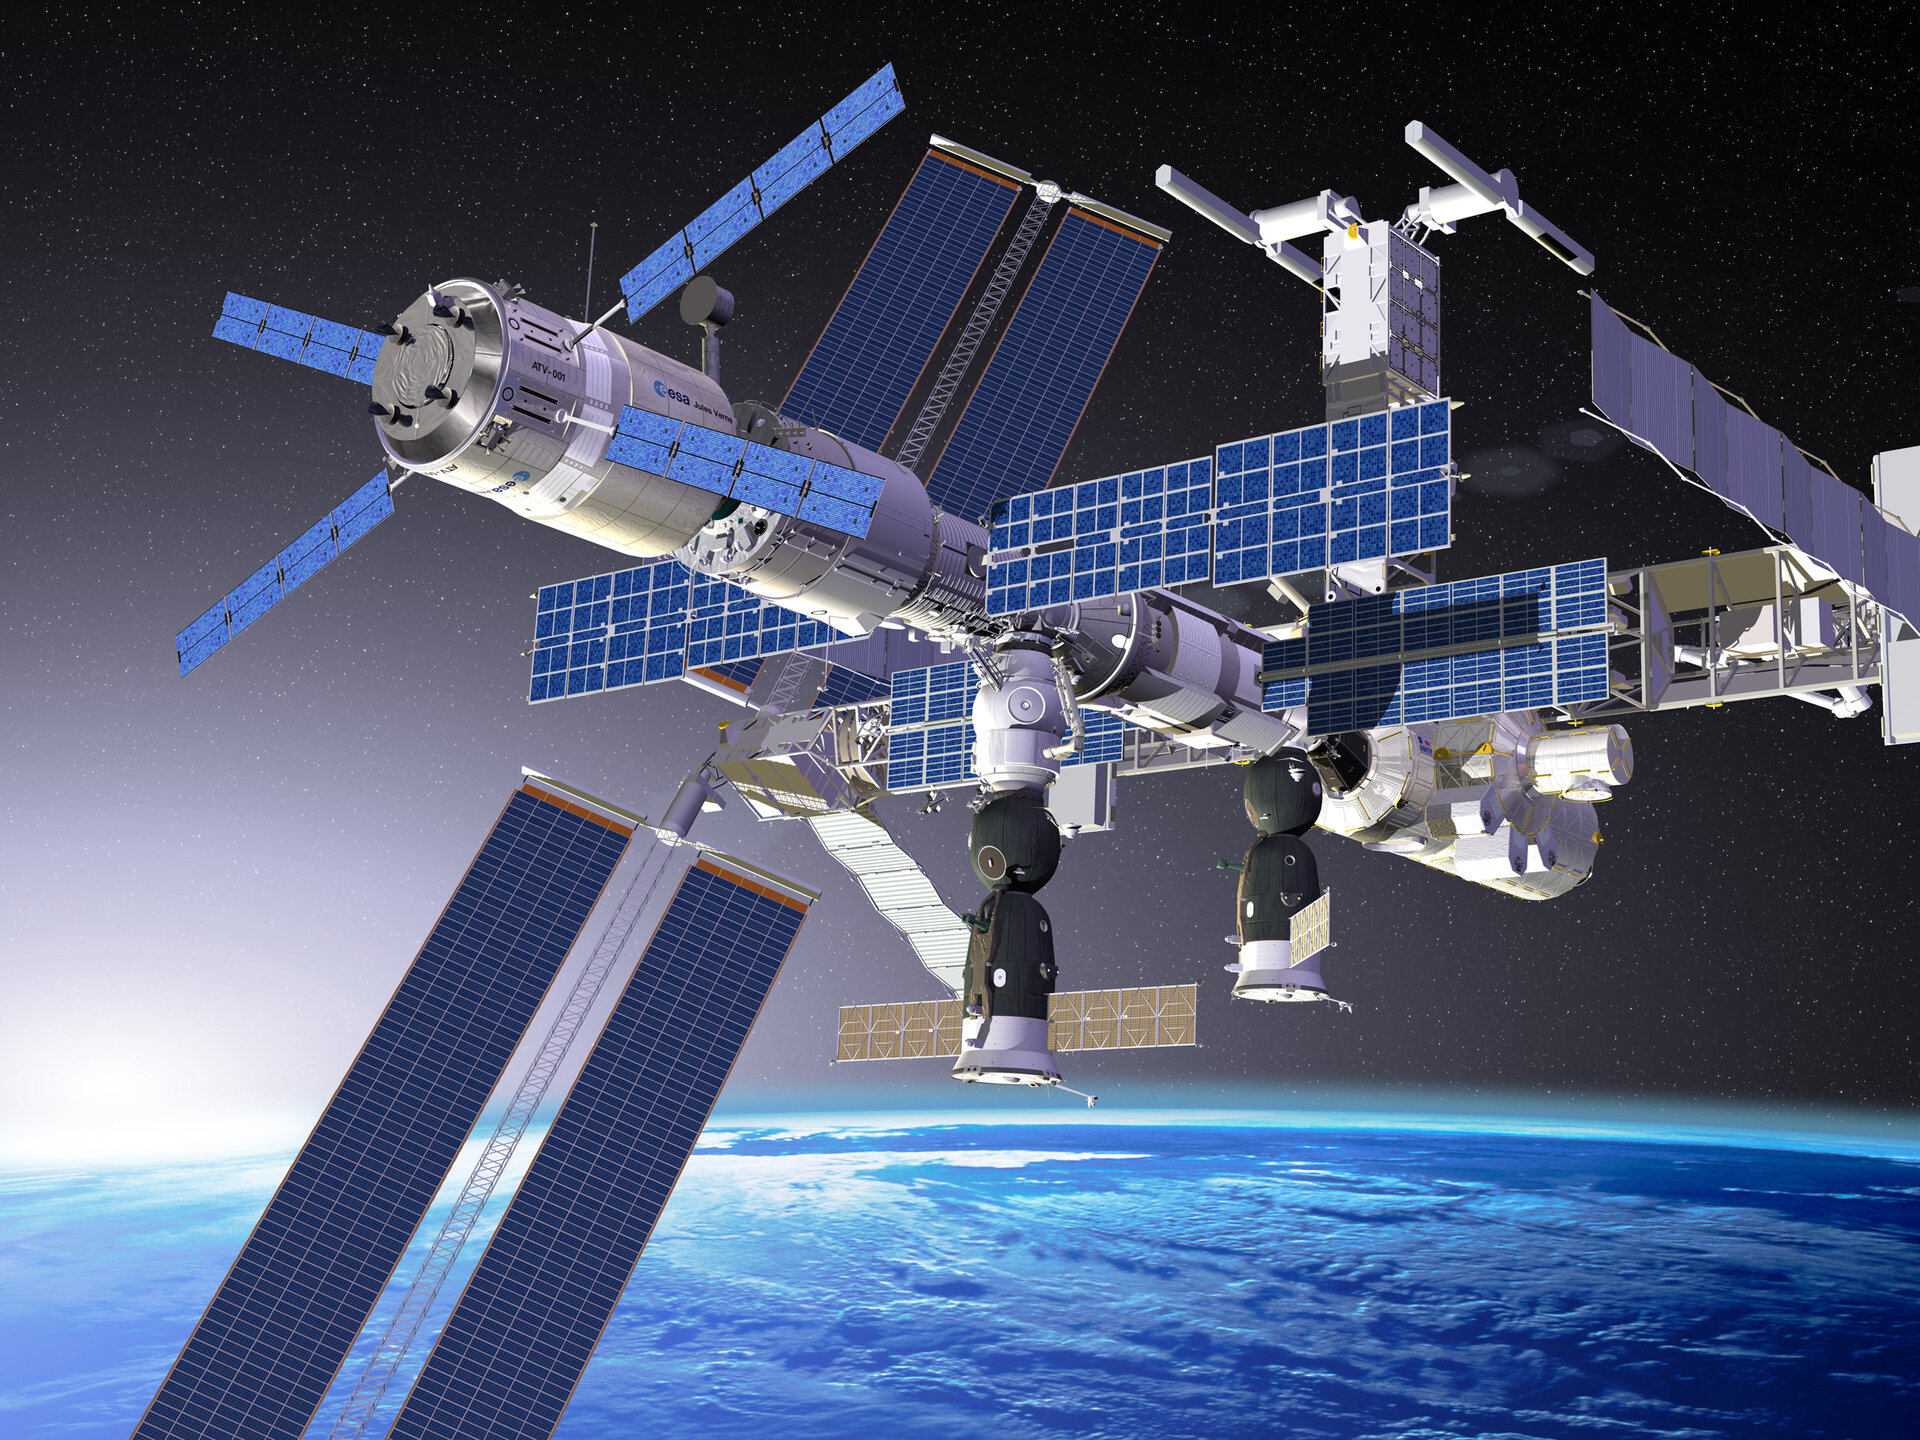 ATV will dock with the Russian Zvezda module